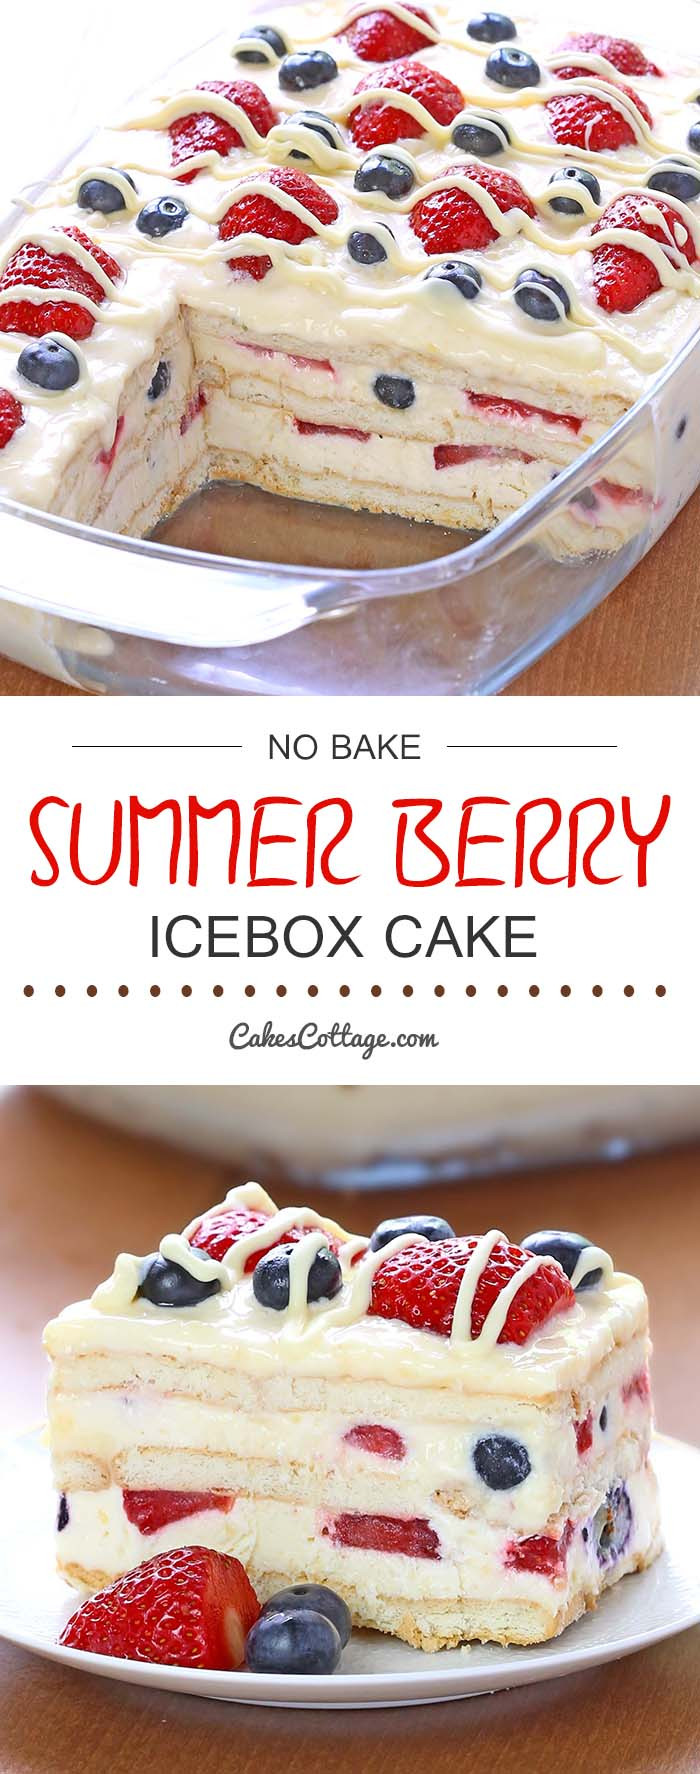 Easy Summer Dessert Recipes
 No Bake Summer Berry Icebox Cake Cakescottage